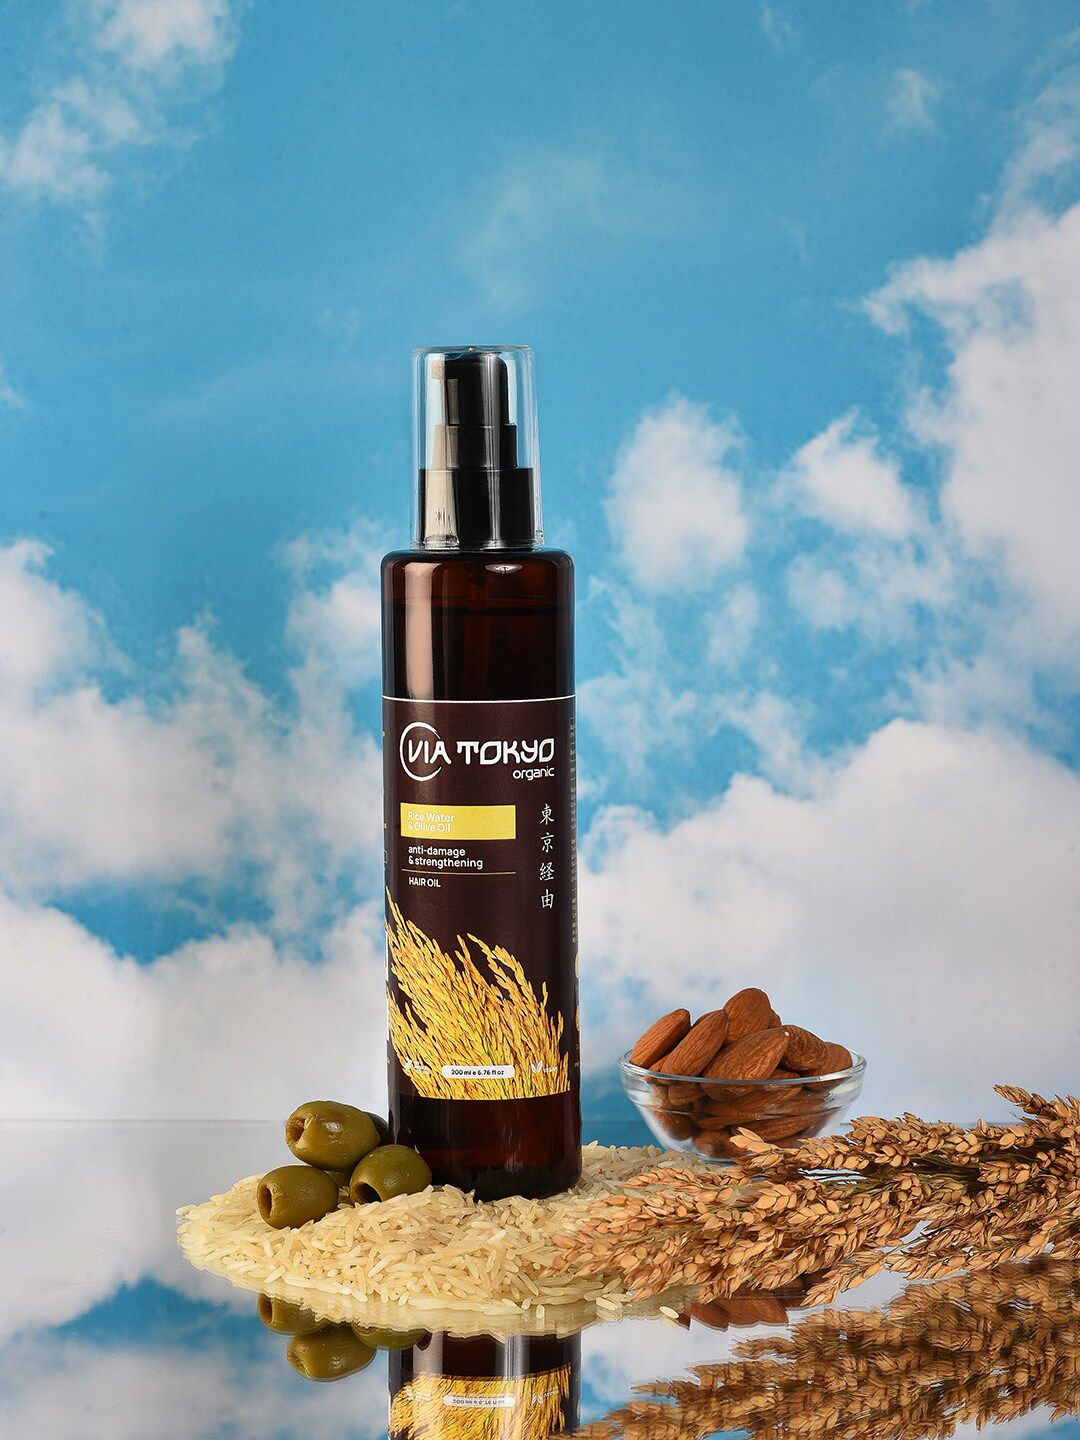 VIA TOKYO ORGANIC Rice Water & Olive Oil Anti-Damage & Strengthening Hair Oil 200 ml Price in India